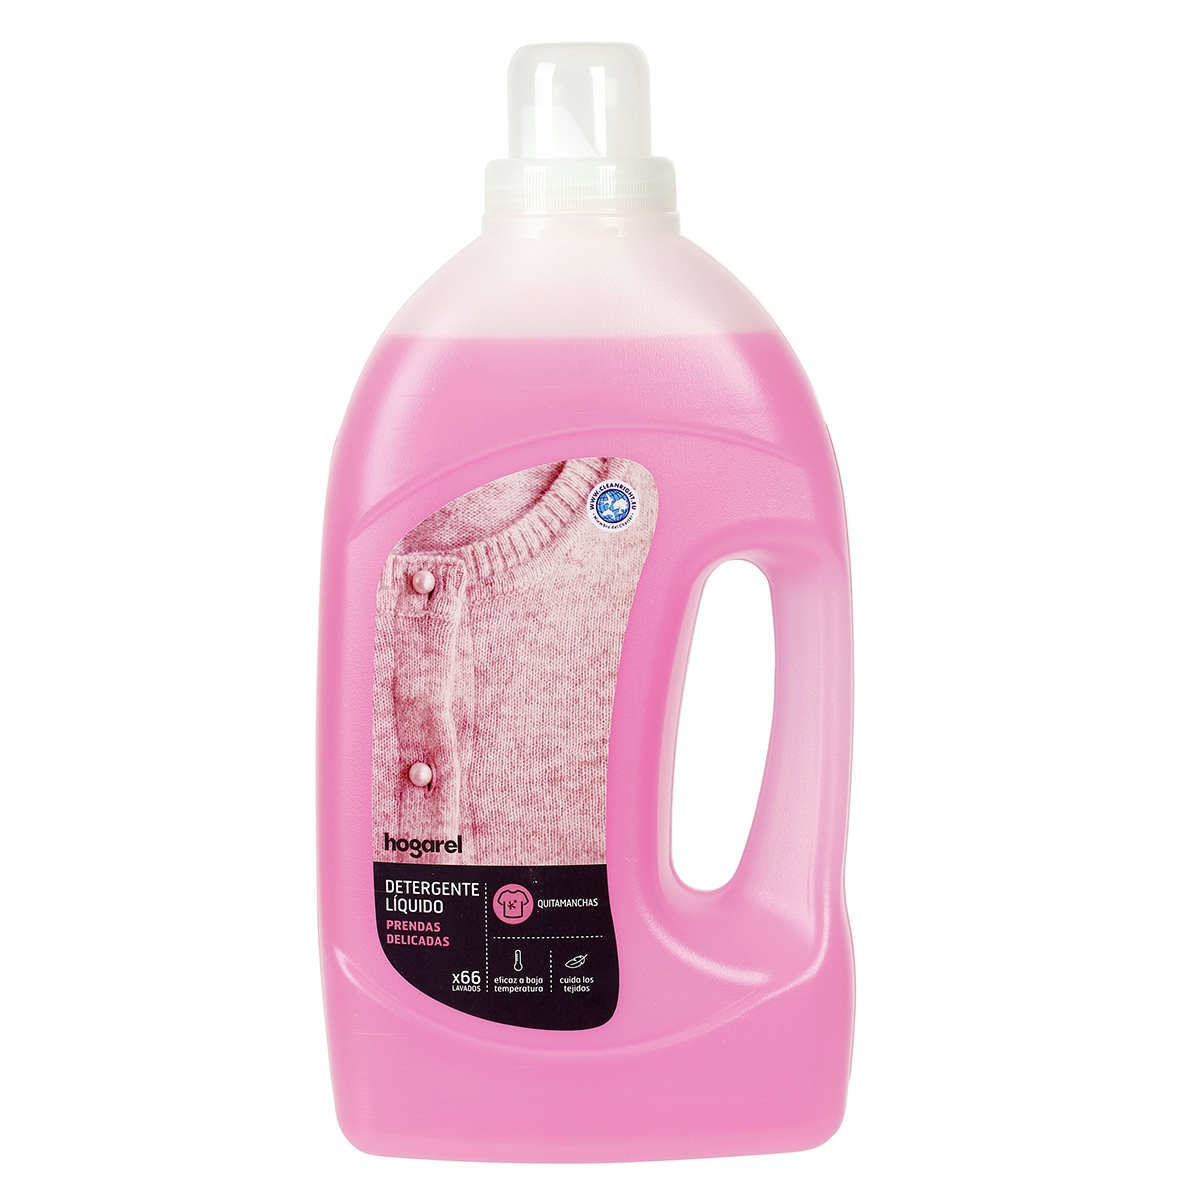 Detergente Liquido Prendas delicadas Hogarel 66 Lav 1,98L